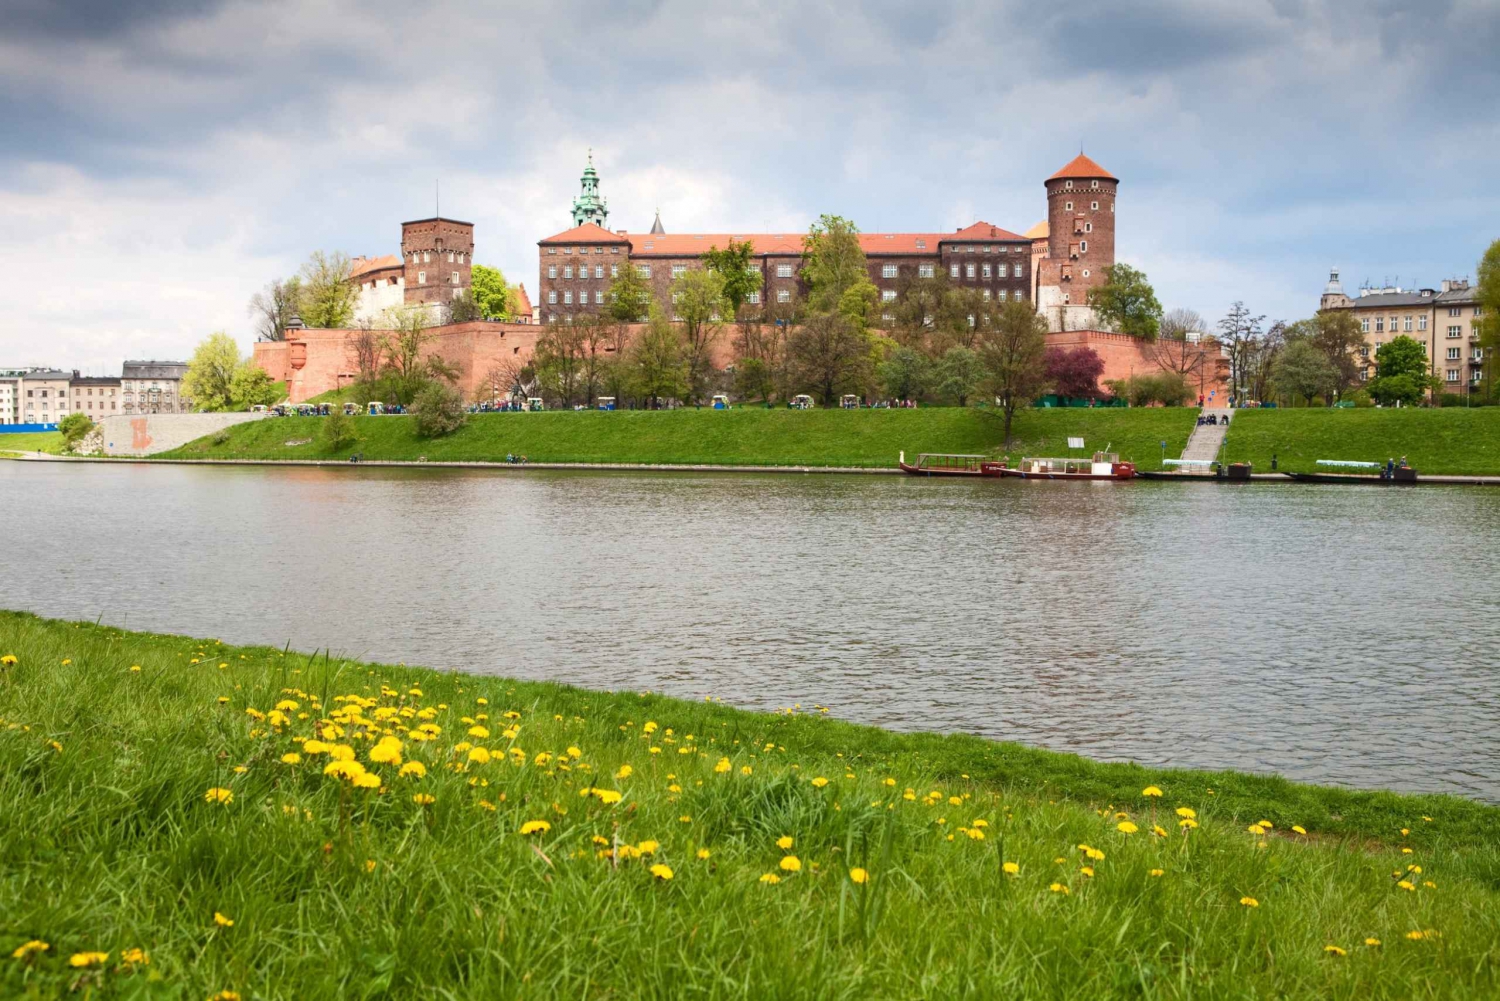 Krakow: Wawel Castle, Cathedral, Salt Mine, and Lunch